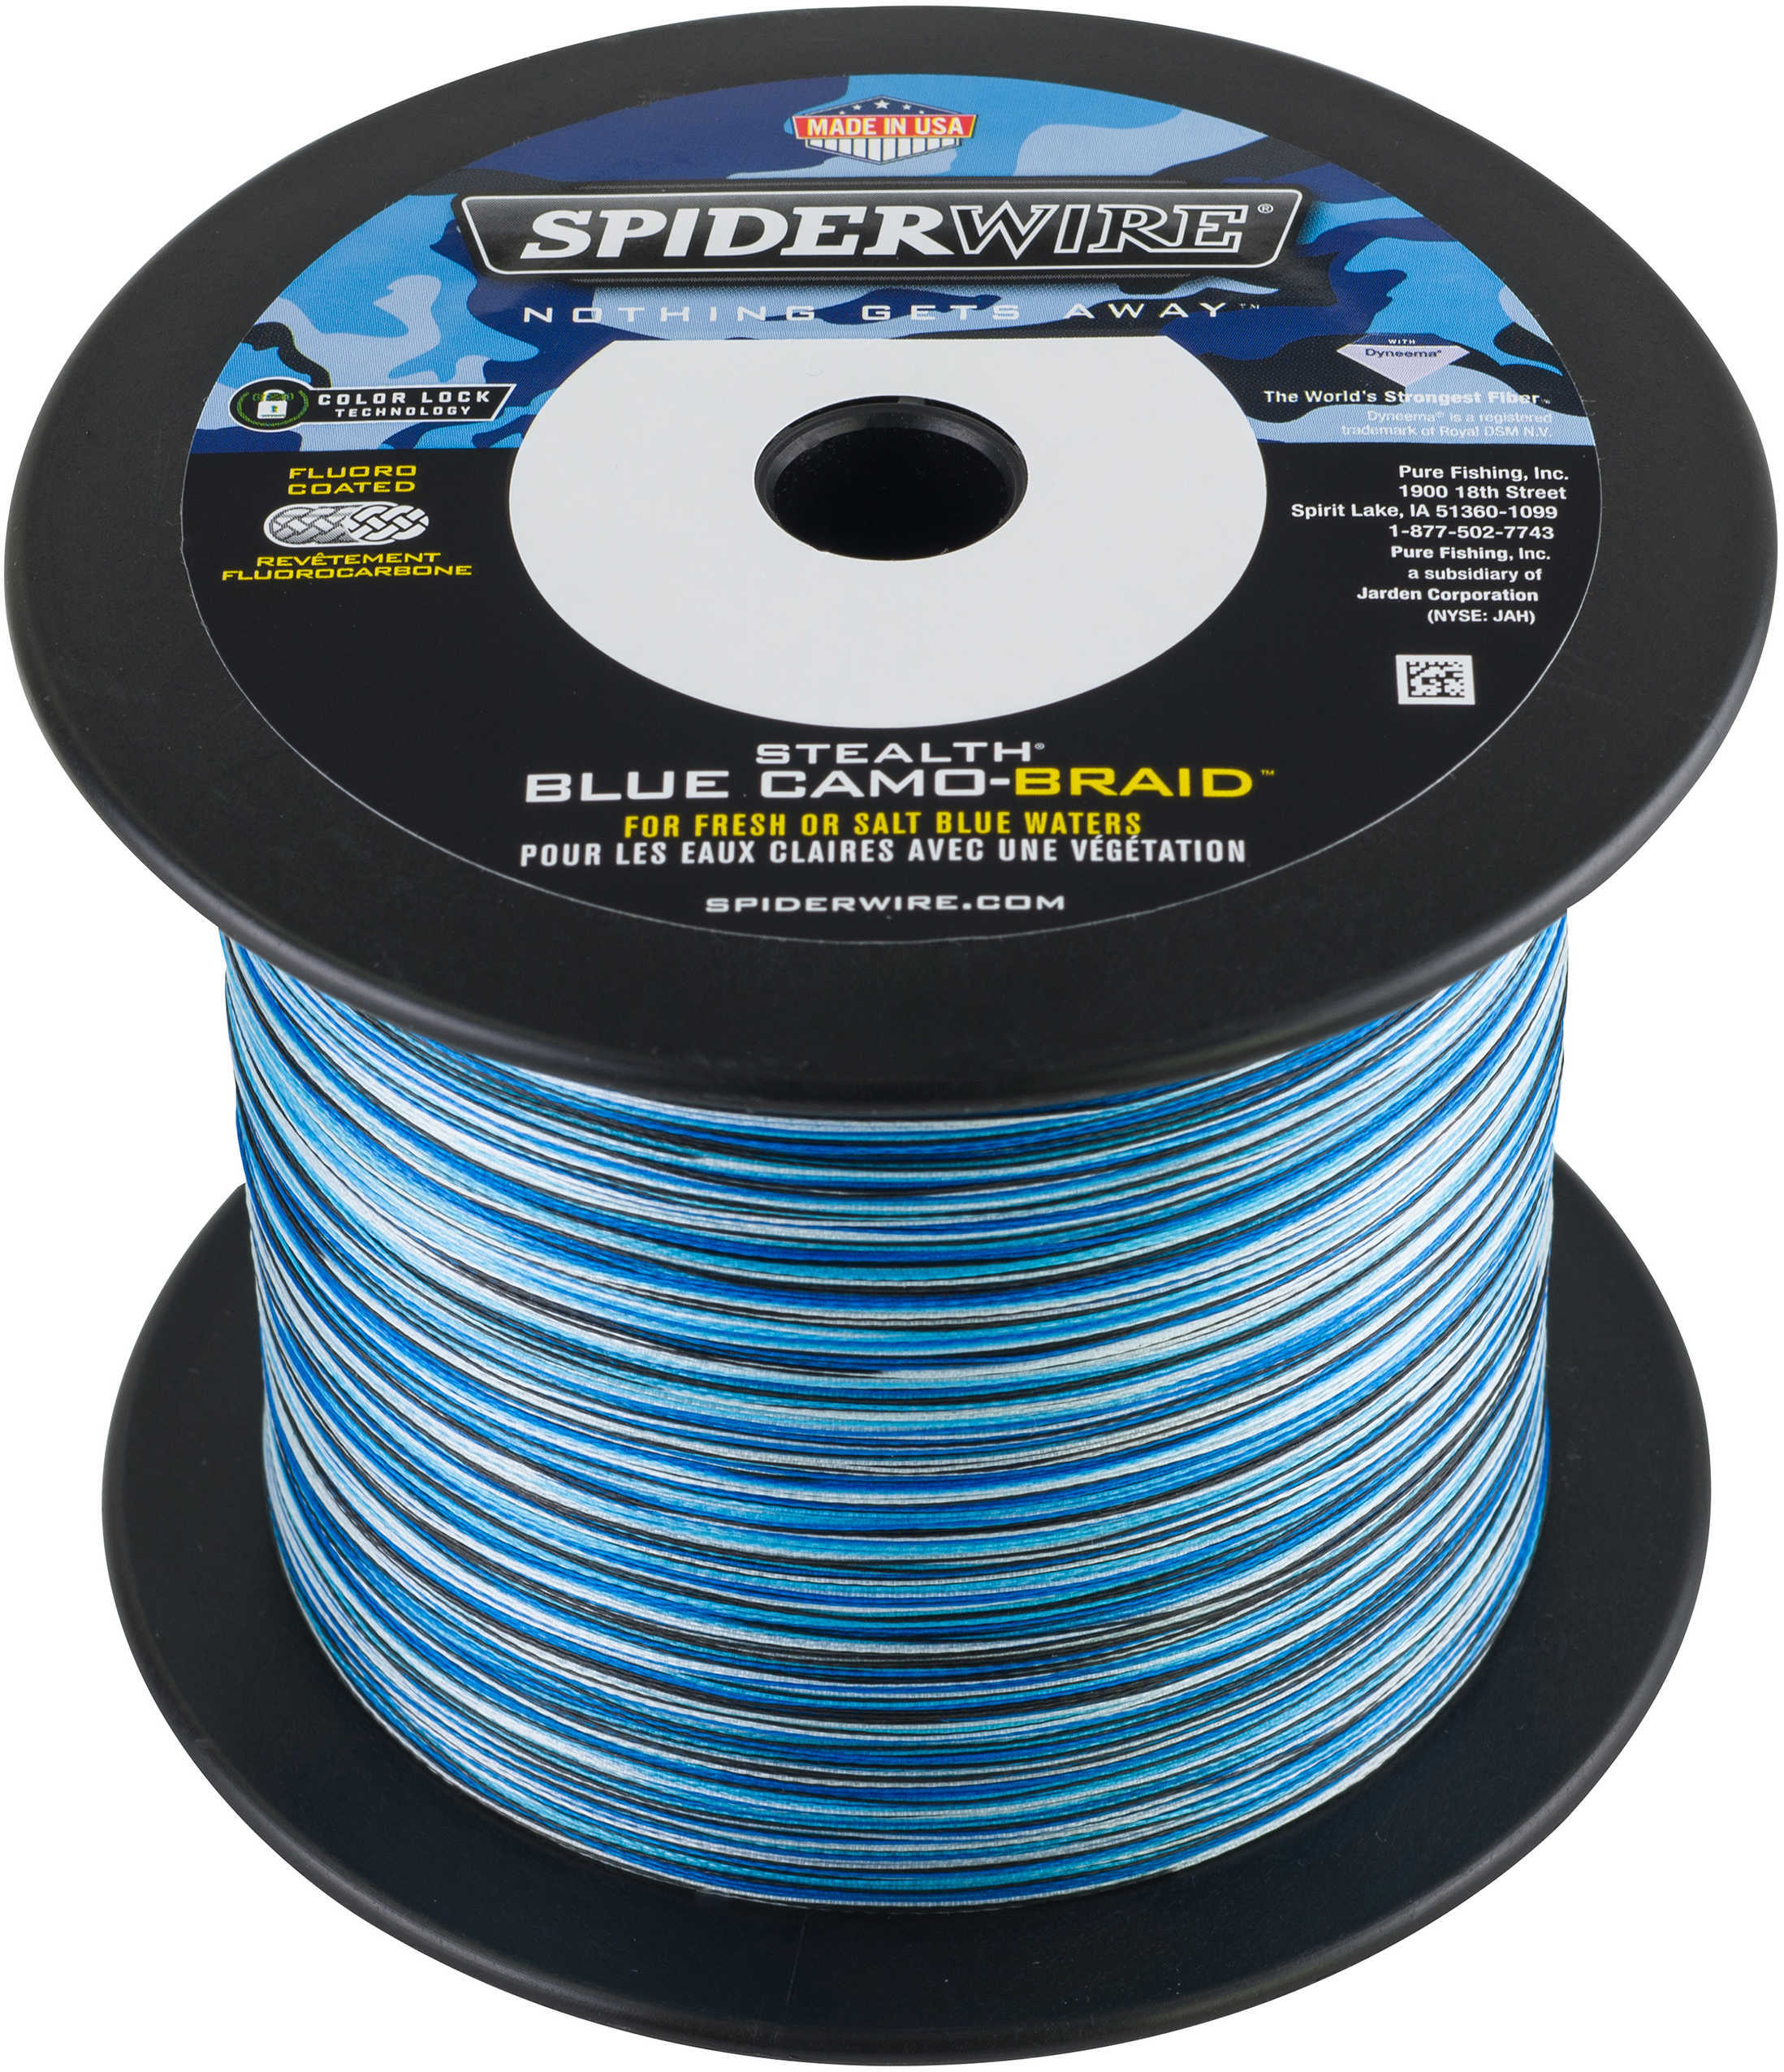 Spiderwire Stealth Braid 3000 Yards lbs Strength 0.012" Diameter Blue Camo Md: 1370465